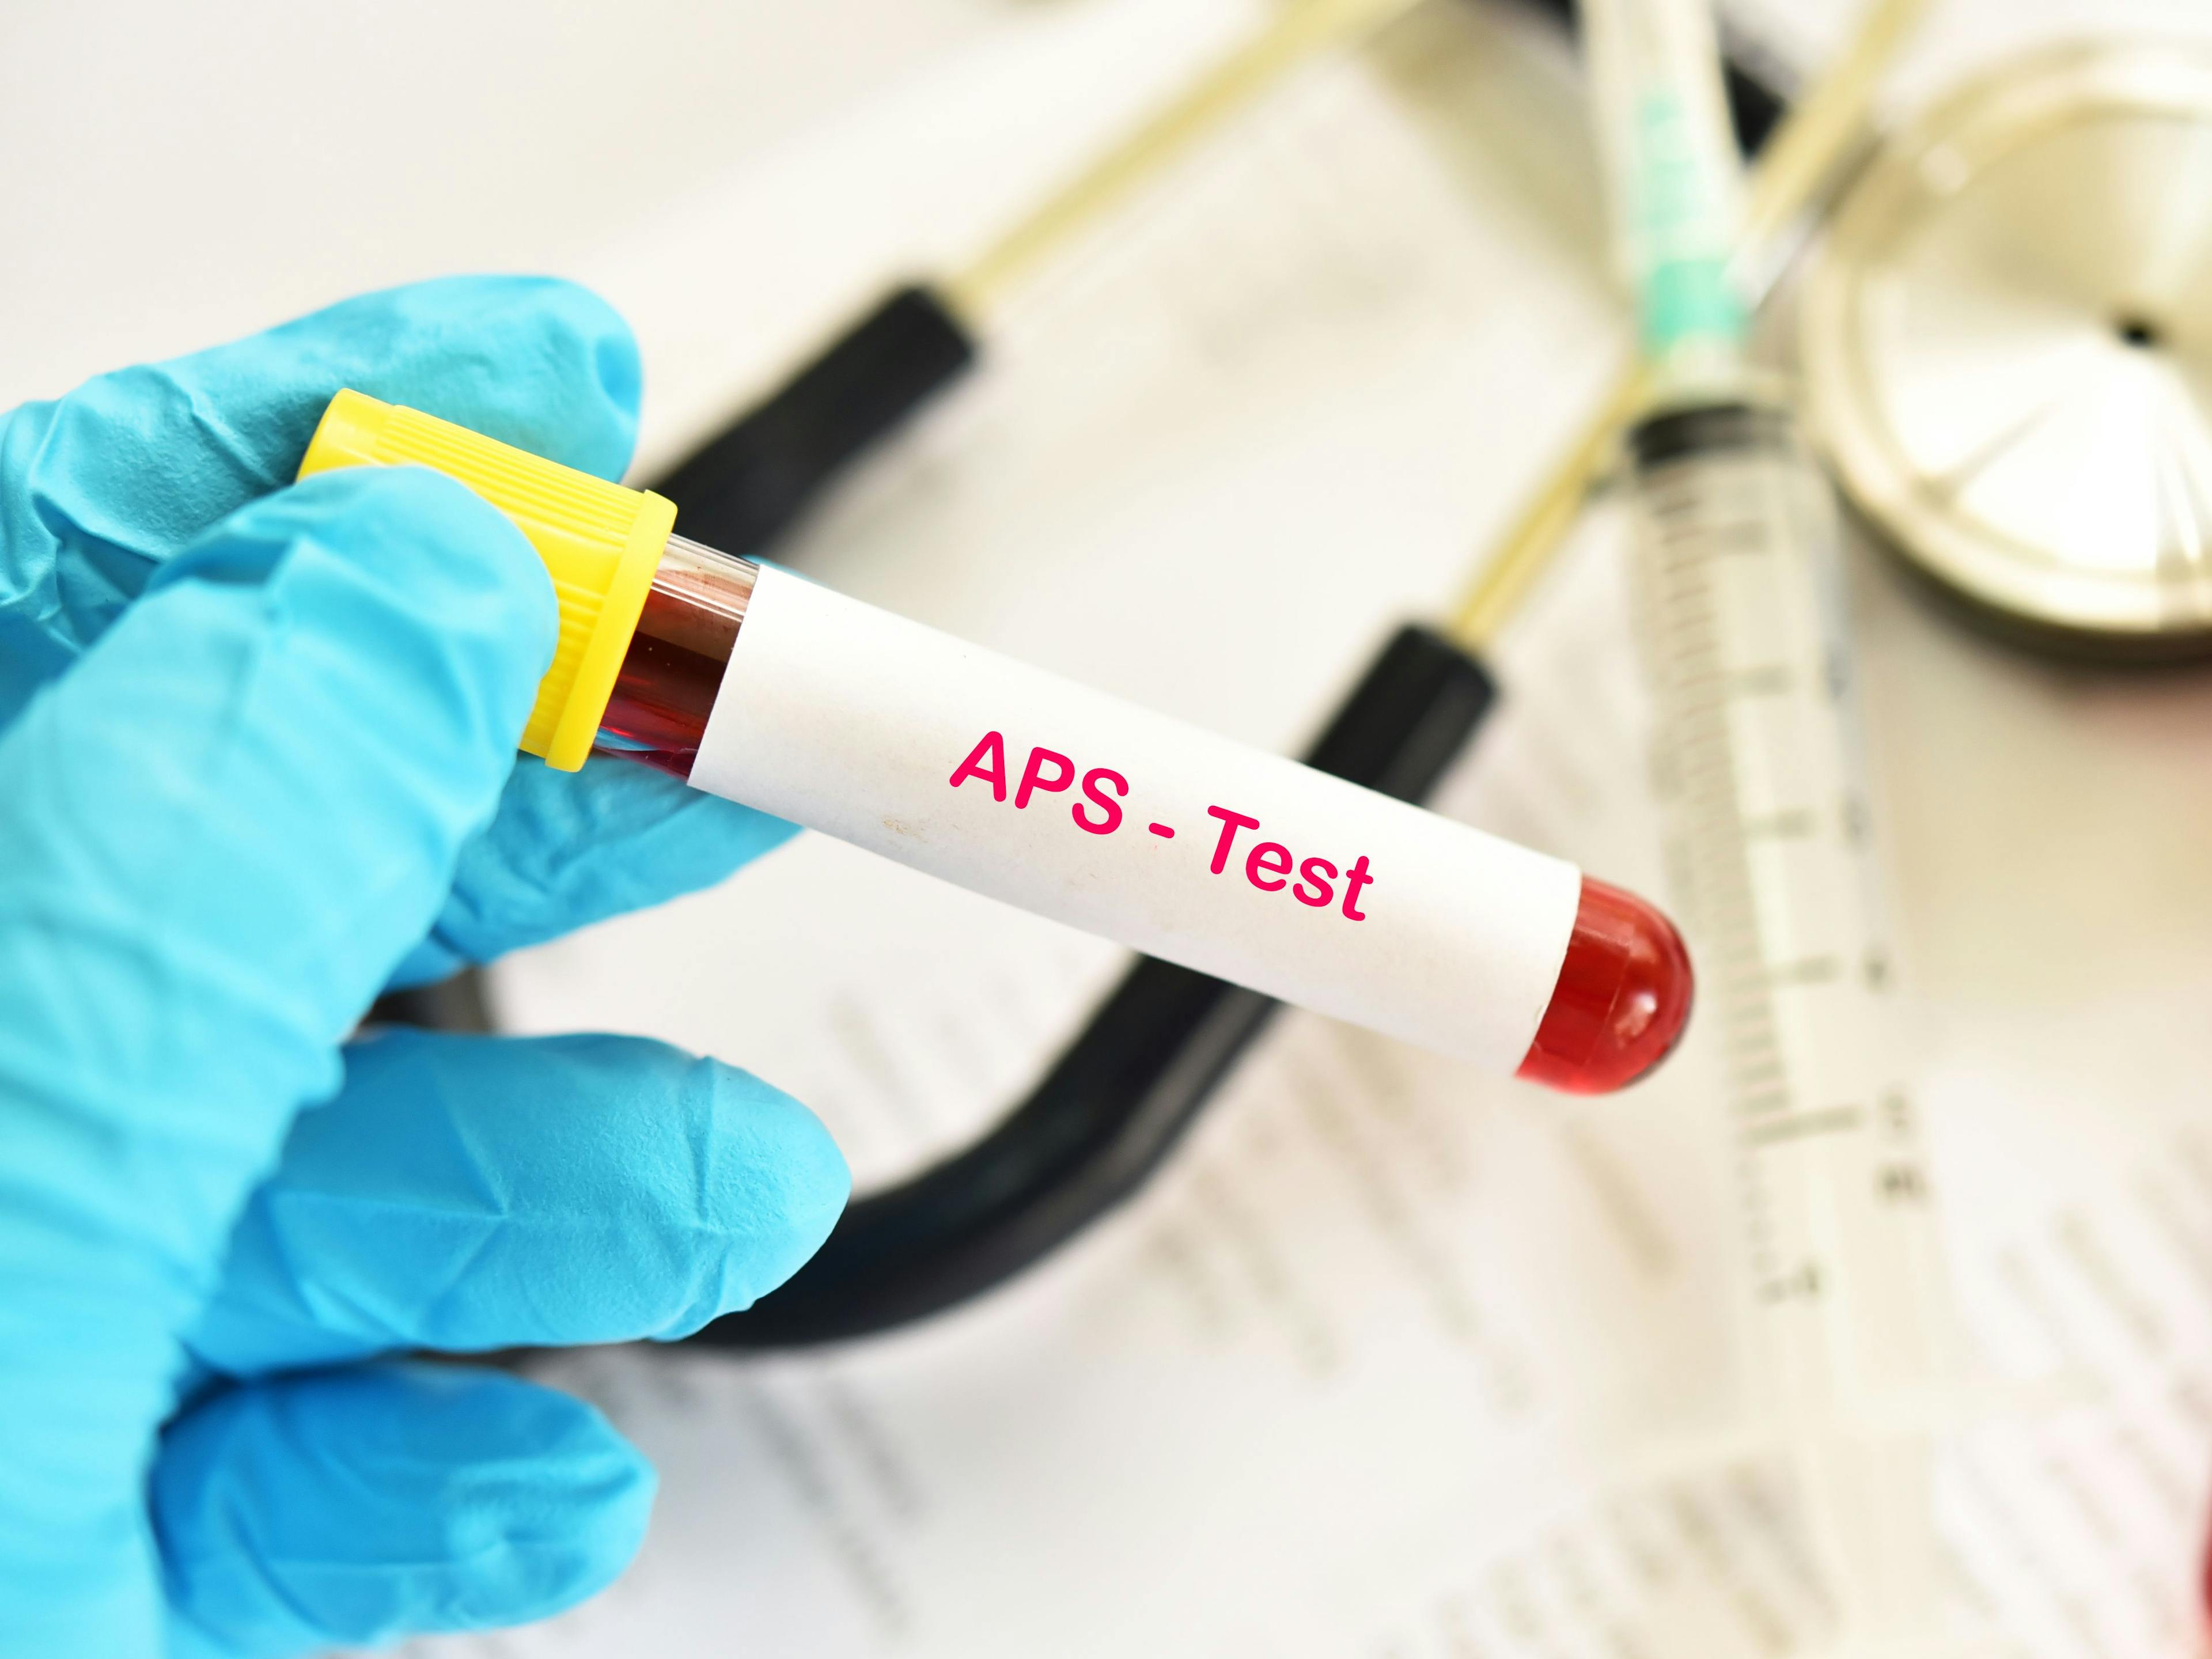 Blood sample tube for antiphospholipid syndrome (APS) test, diagnosis for autoimmune disease - Image credit: Jarun011 | stock.adobe.com 